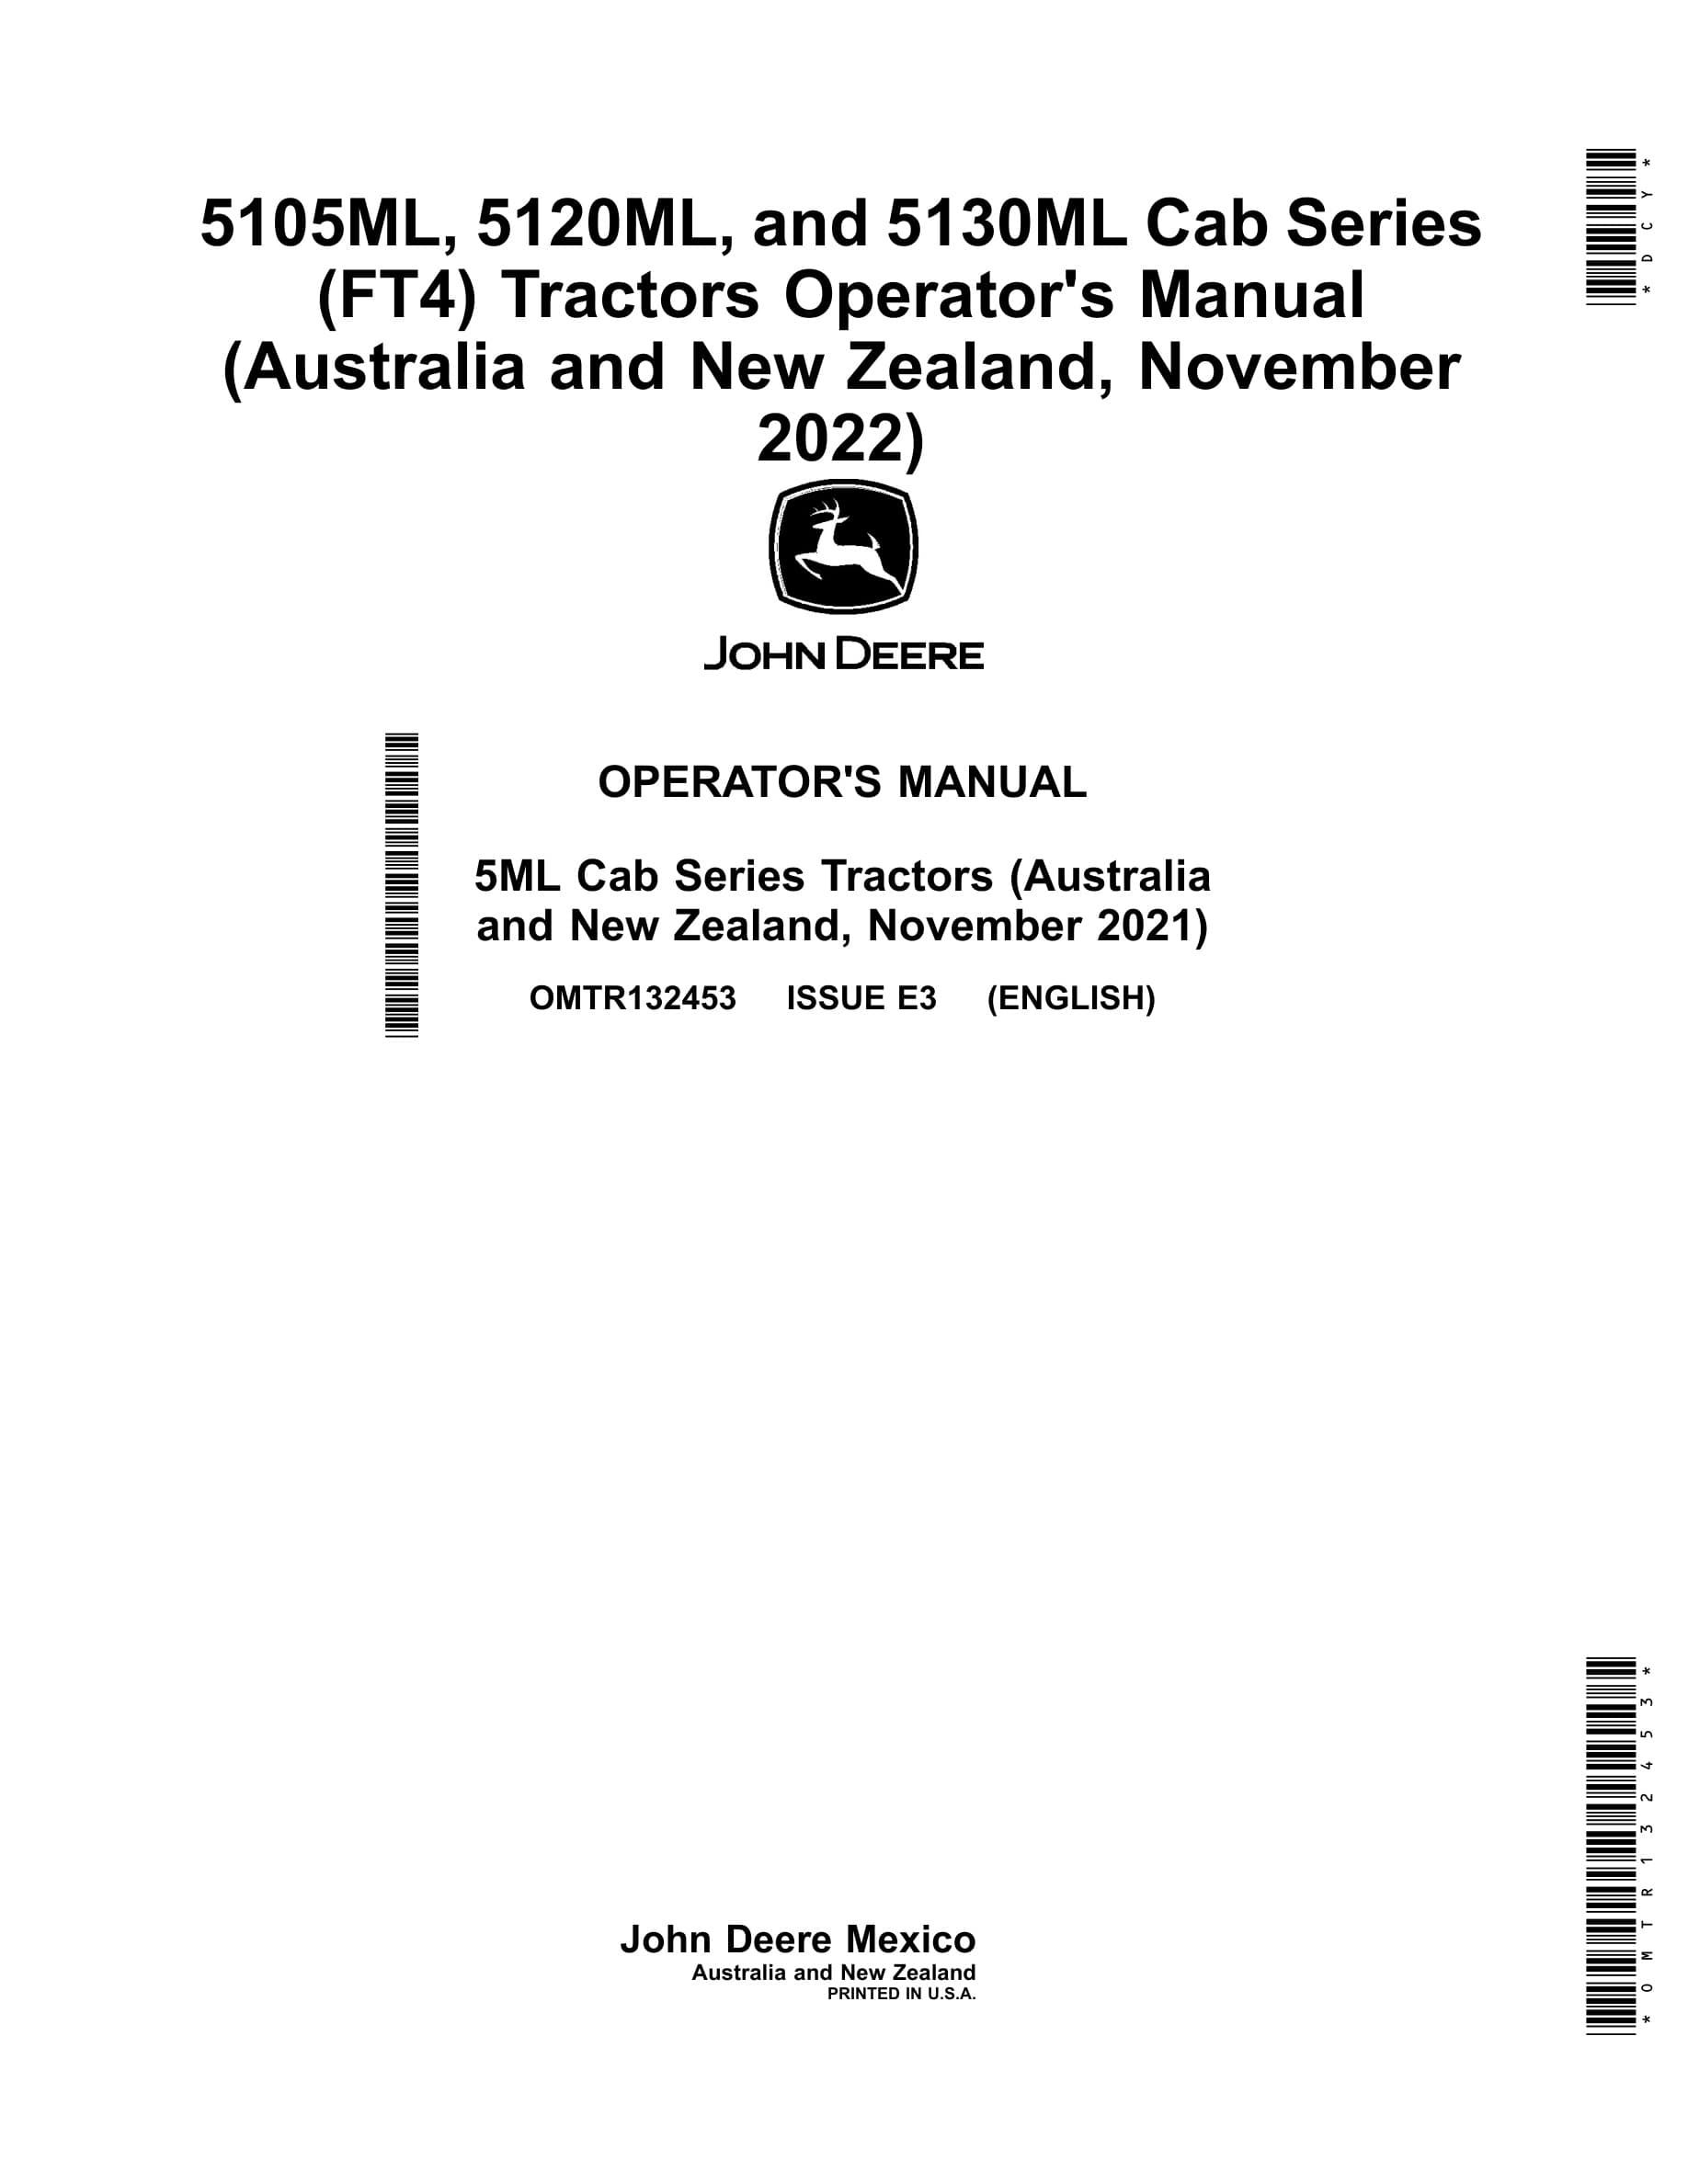 John Deere 5105ml, 5120ml, And 5130ml Cab Series (ft4) Tractors Operator Manuals OMTR132453-1